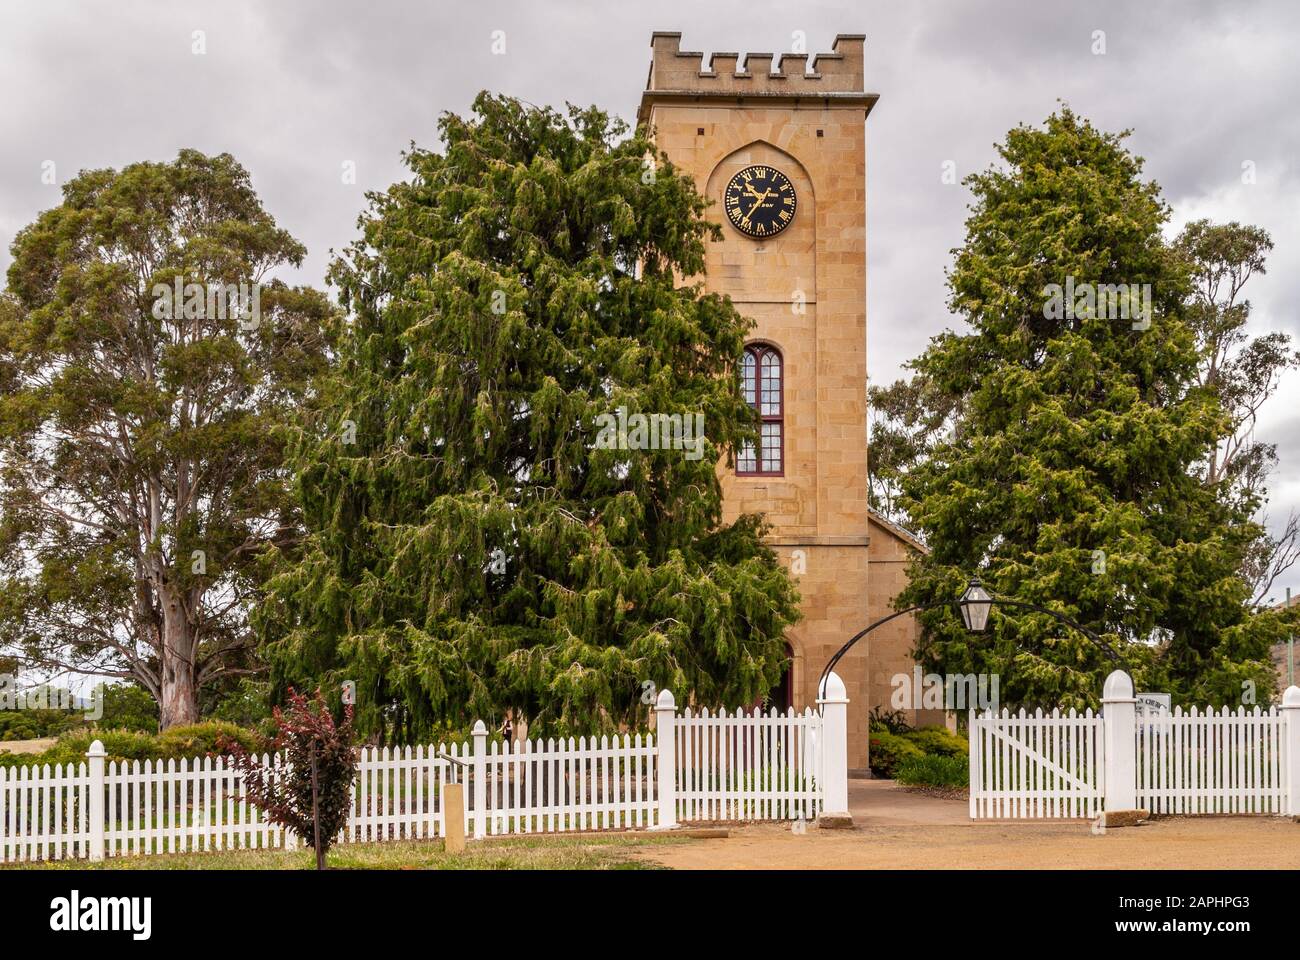 Richmond, Tasmania, Australia - December 13, 2009: Saint Luke Church. Beige stone tower with entrance and dominant clock, set trees with Stock Photo -